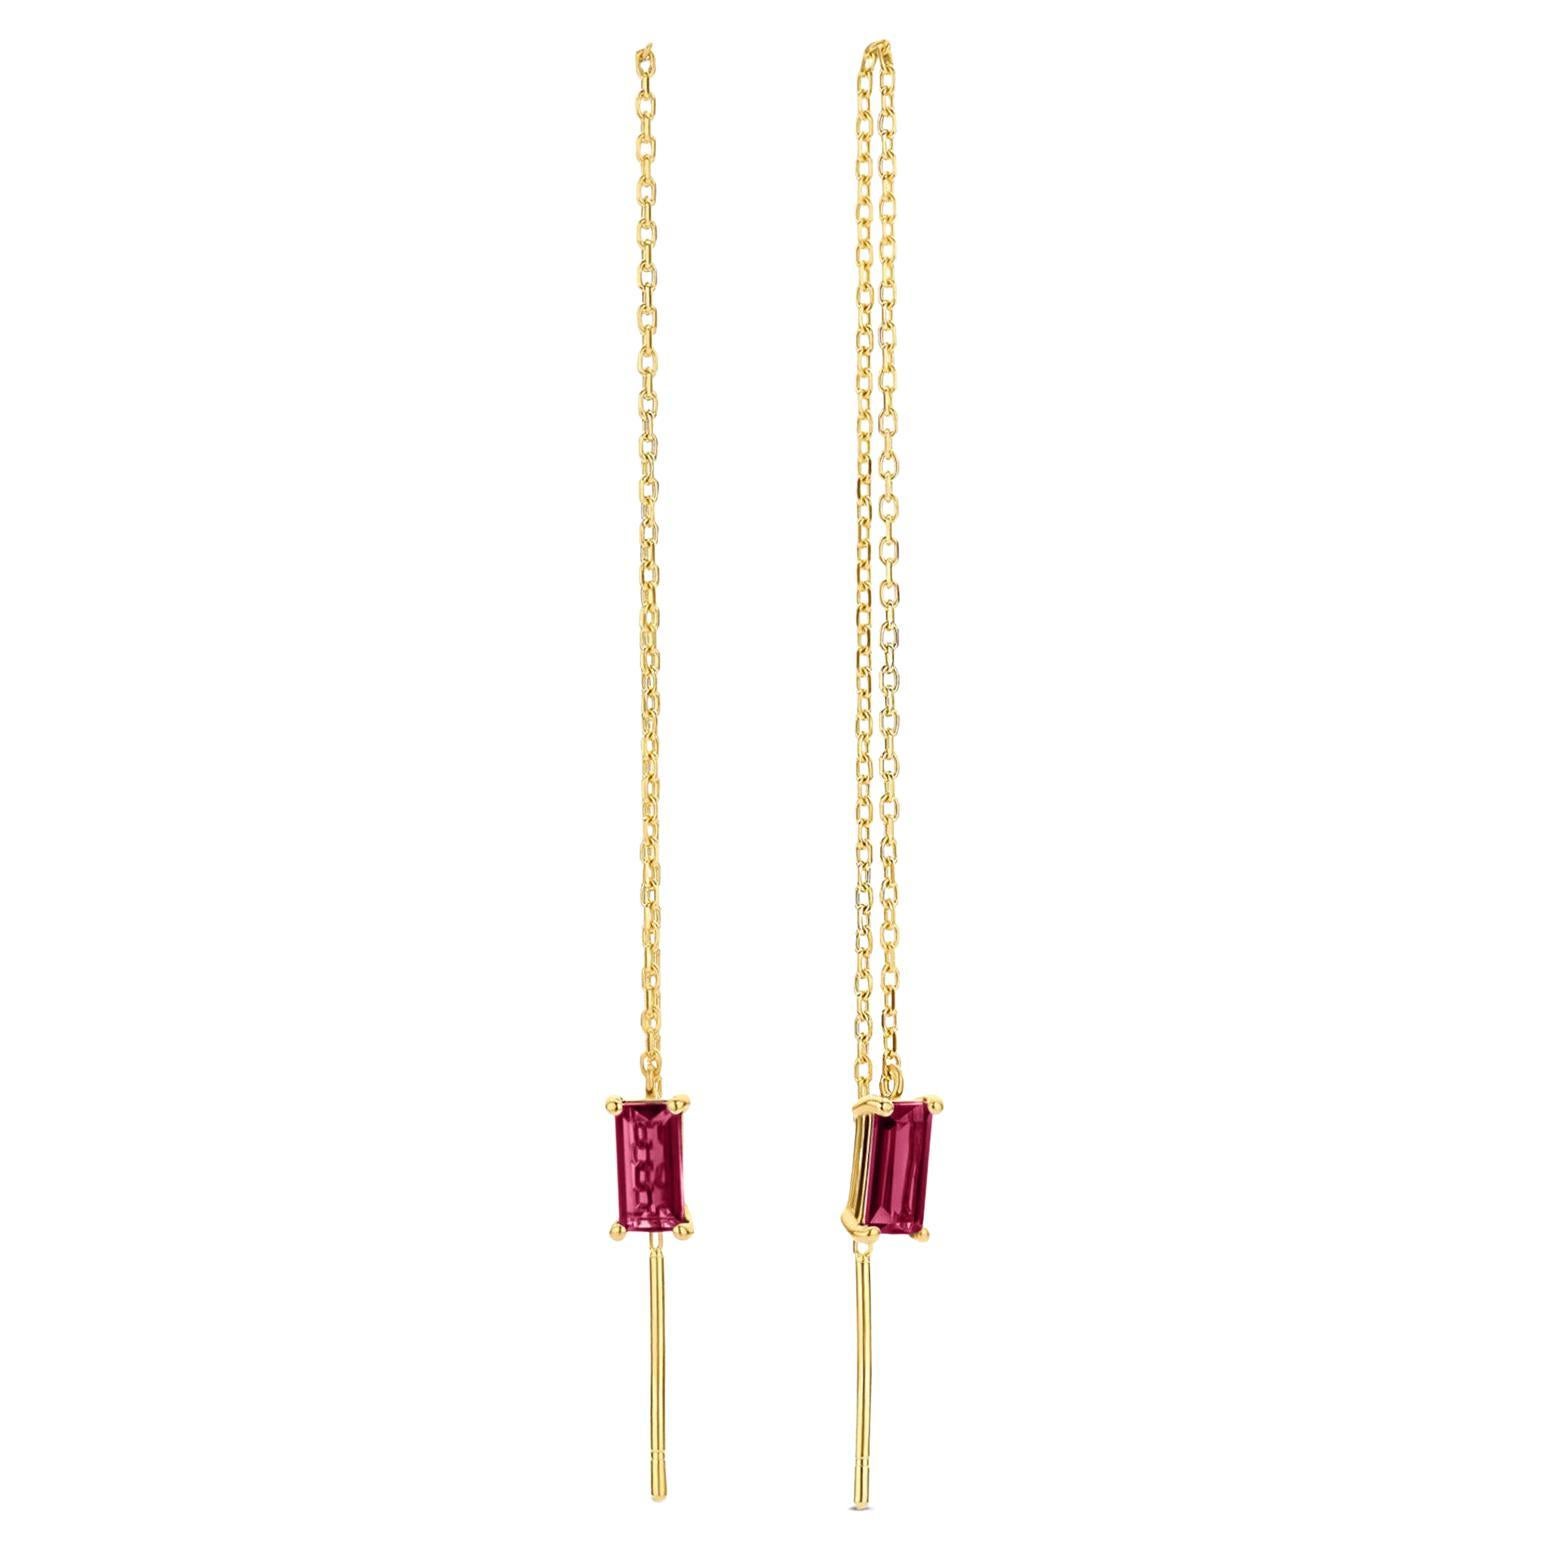 14k Solid Gold Drop Earrings with Garnet, Chain Gold Earrings For Sale